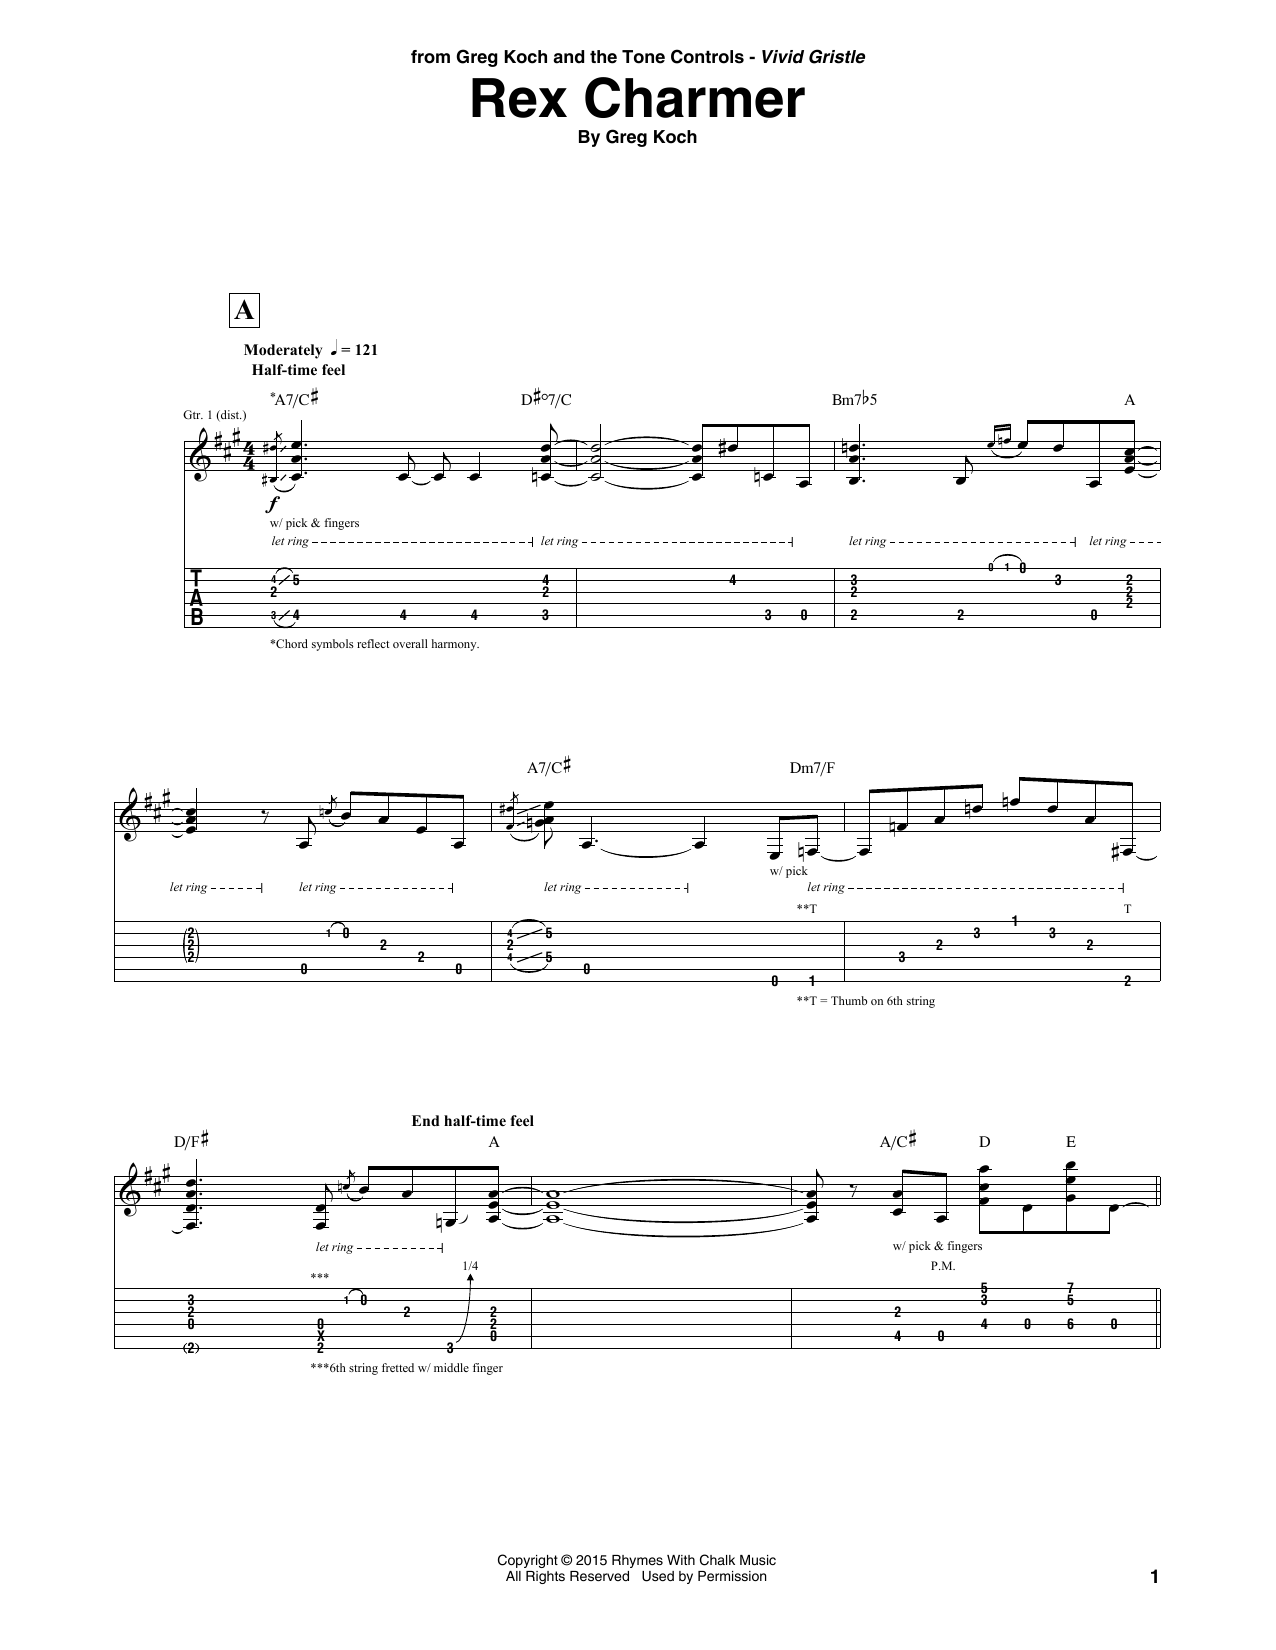 Greg Koch Rex Charmer Sheet Music Notes & Chords for Guitar Tab - Download or Print PDF